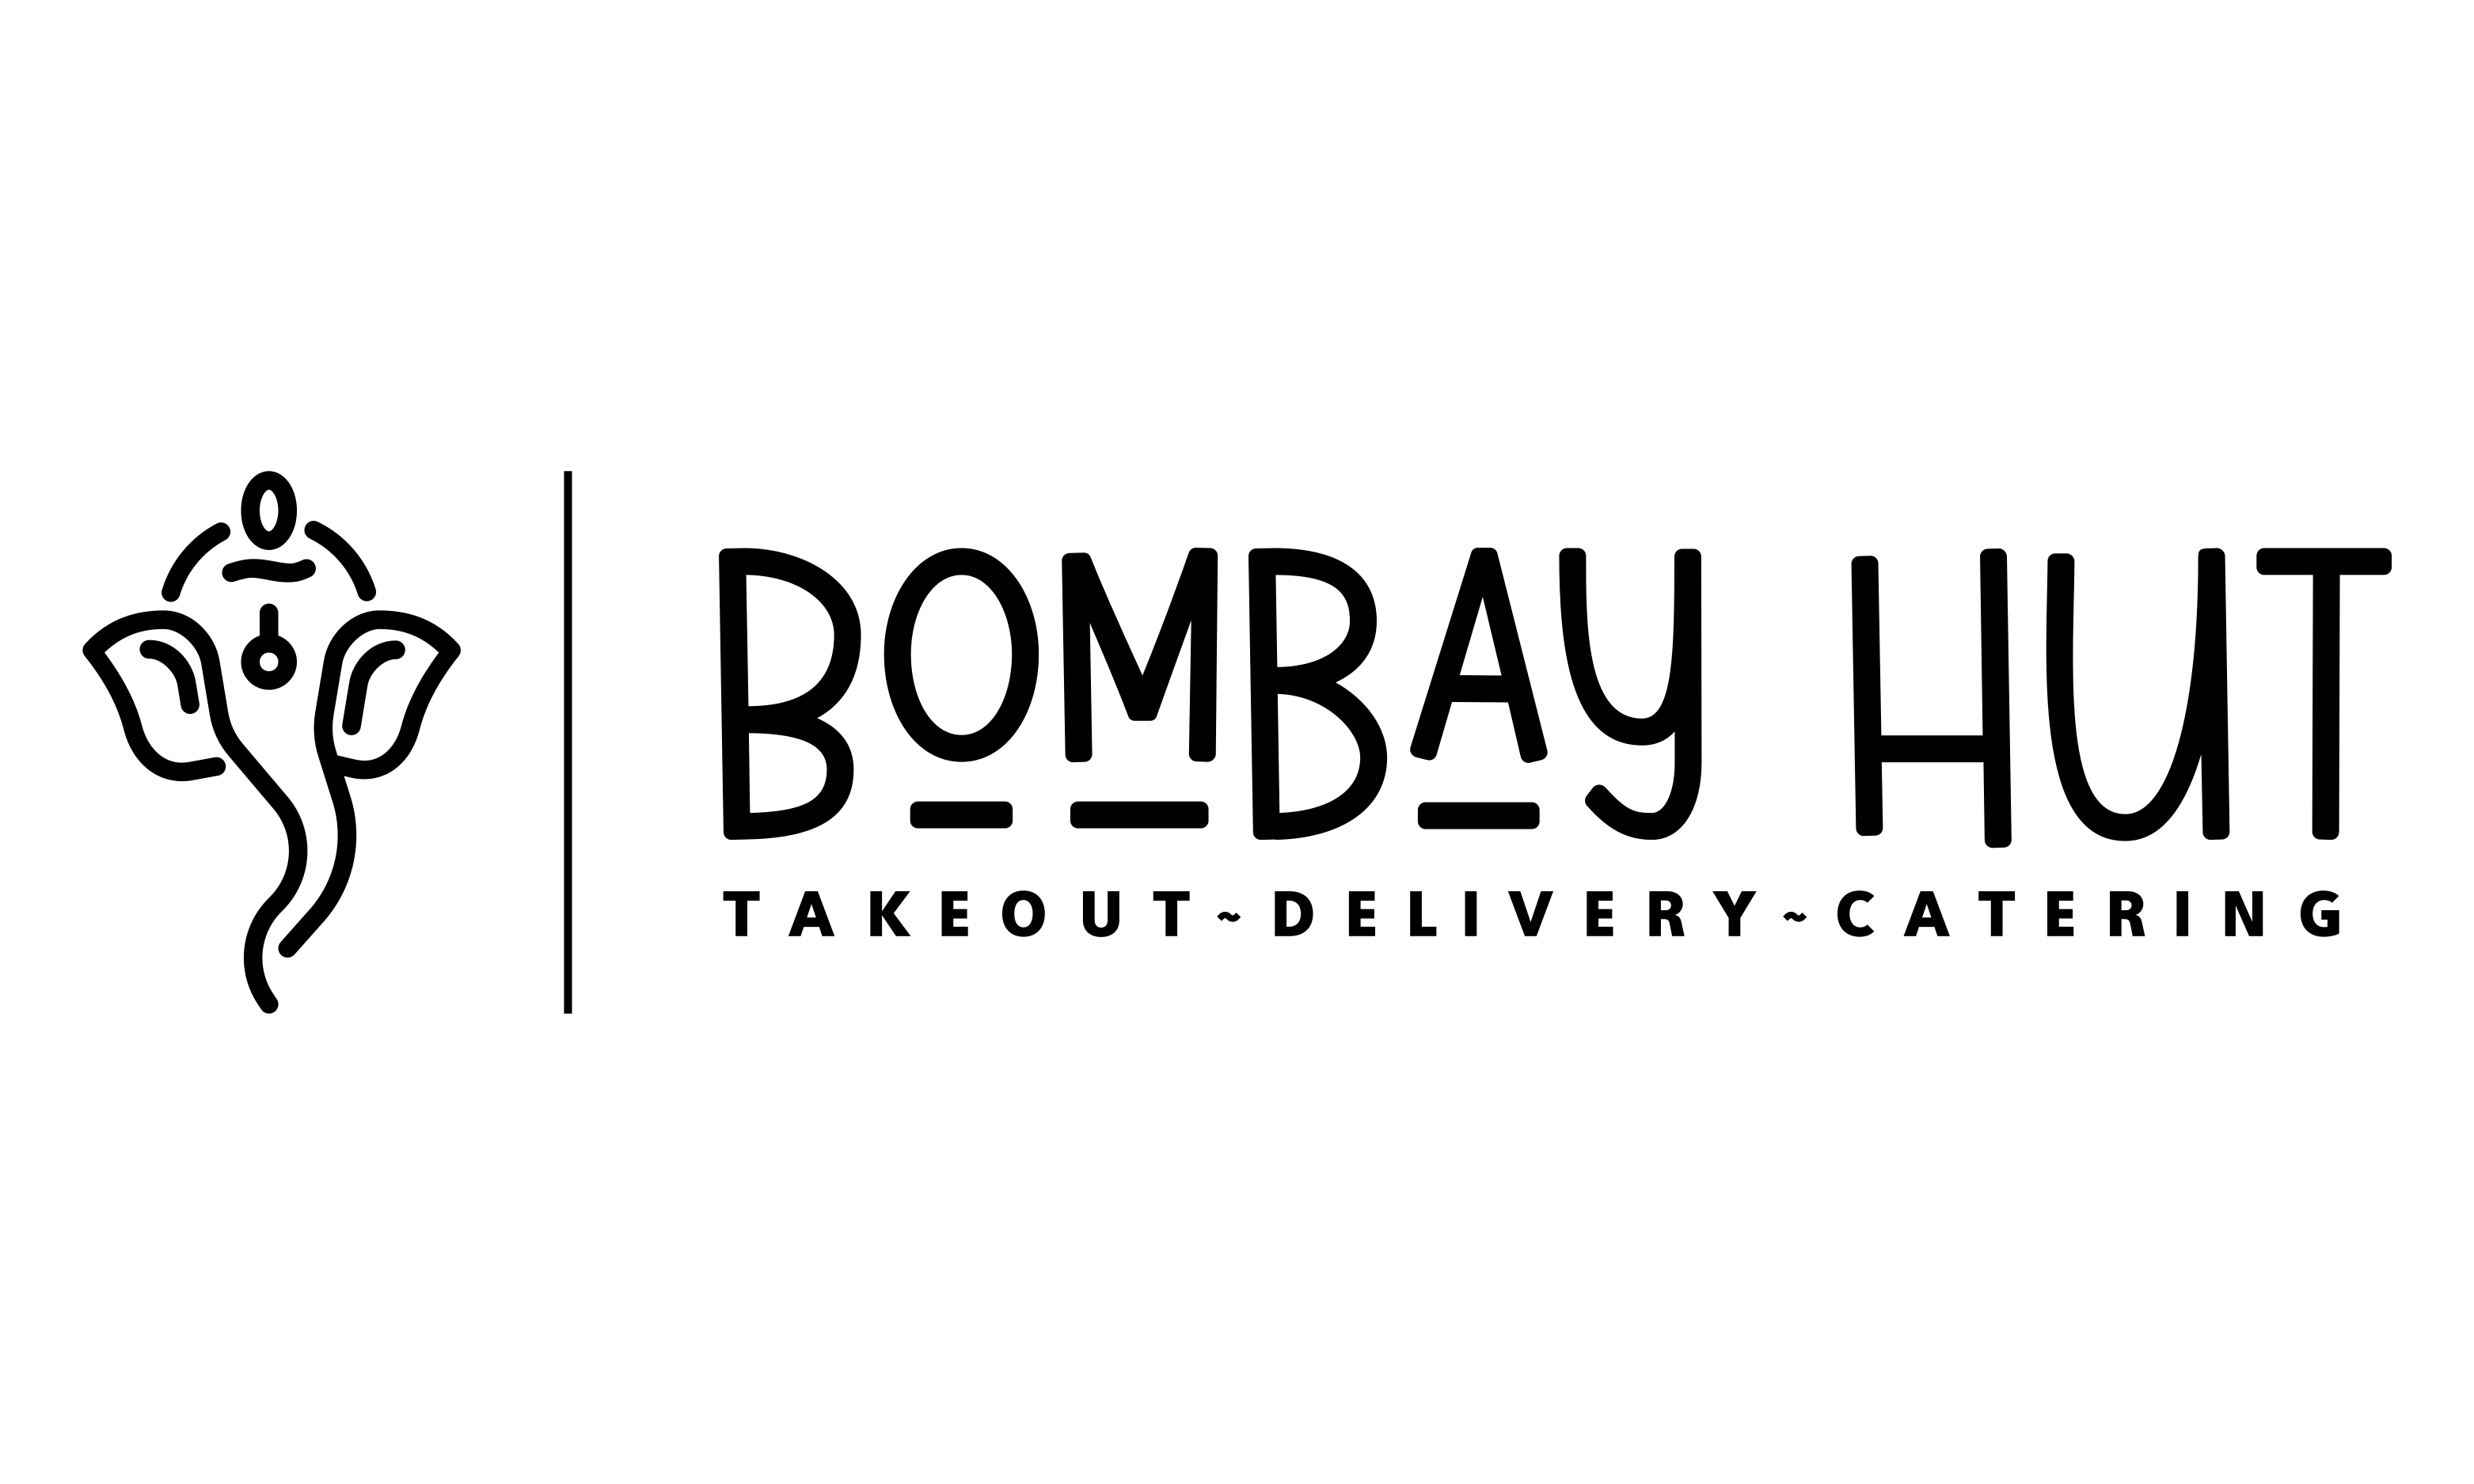 Bombay Hut merchandise